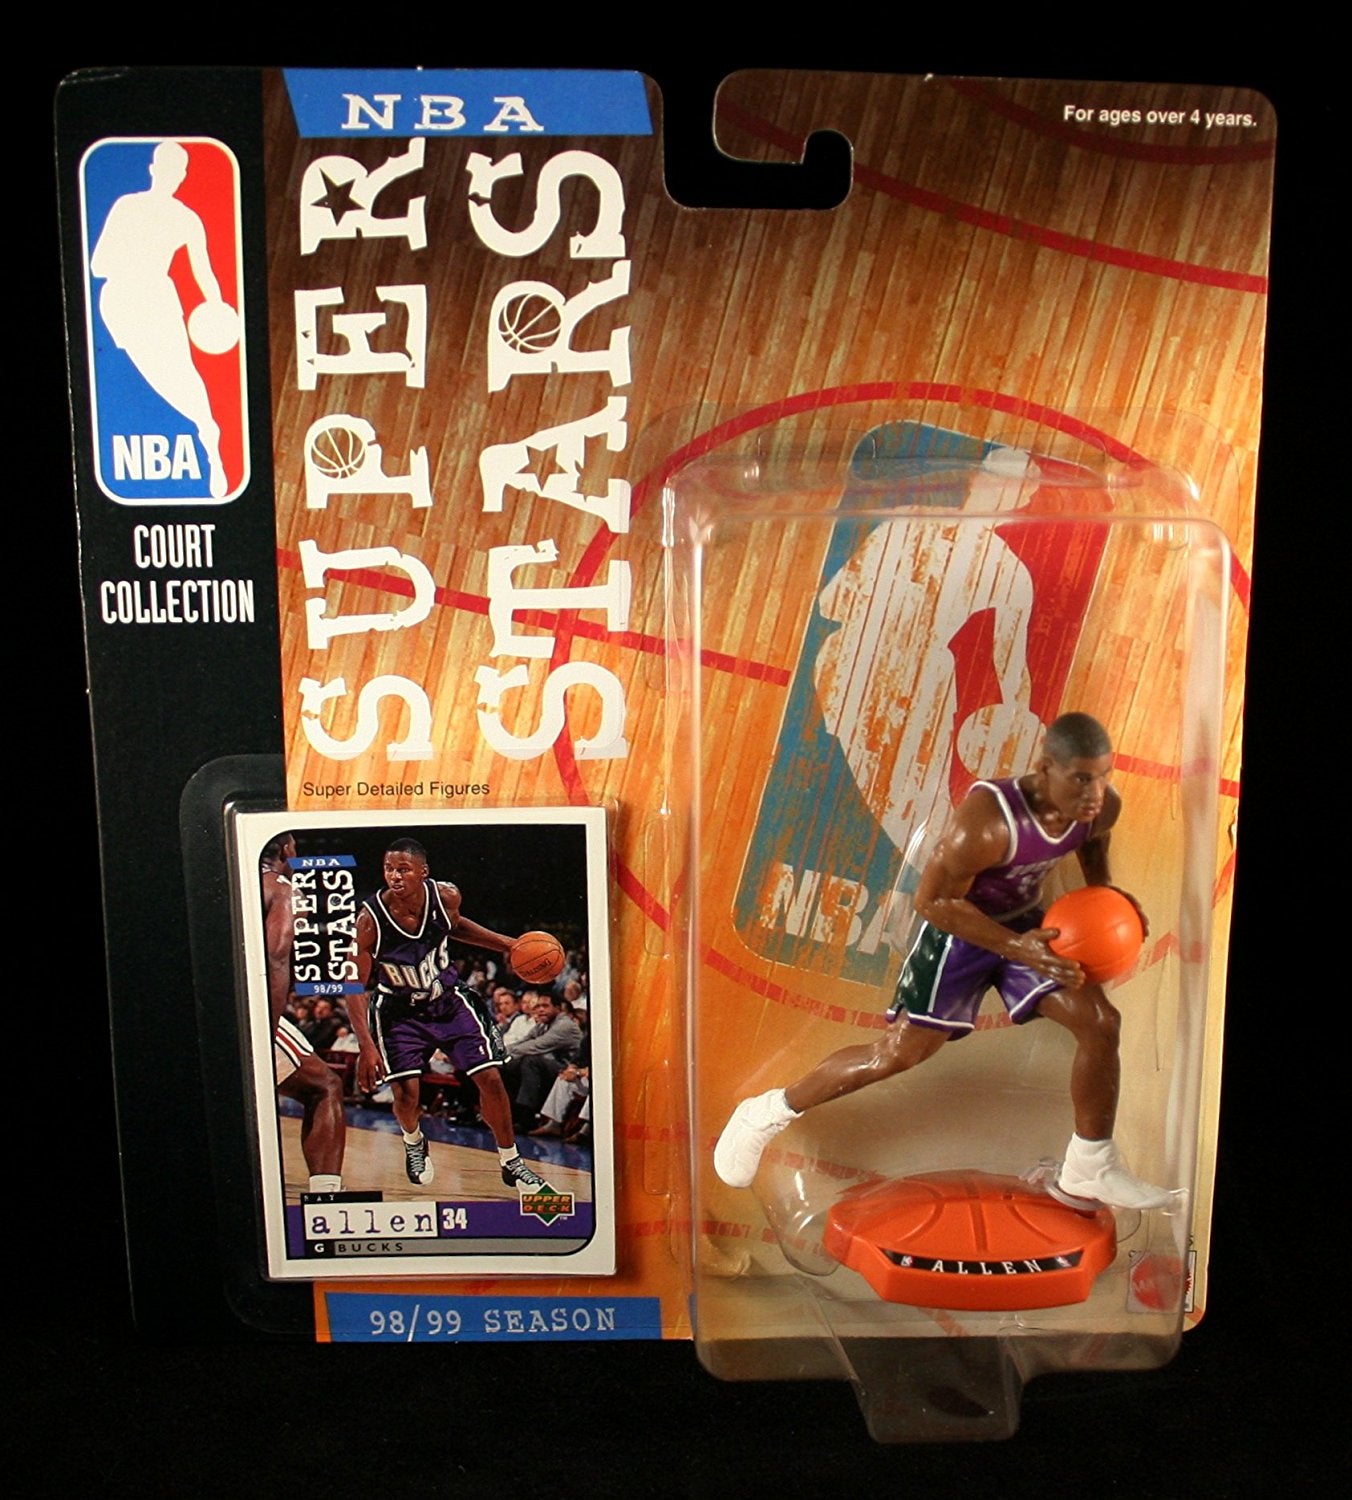 RAY ALLEN / MILWAUKEE BUCKS * 98/99 Season * NBA SUPER STARS Super Detailed Figure, Display Base & Exclusive Upper Deck Collector Trading Card